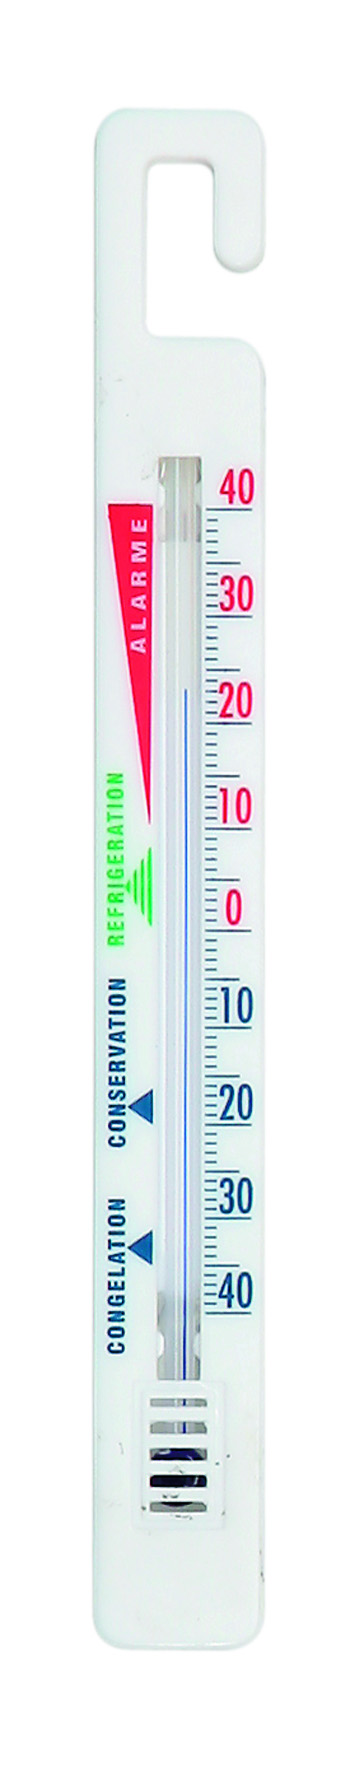 Thermomètre refri divers